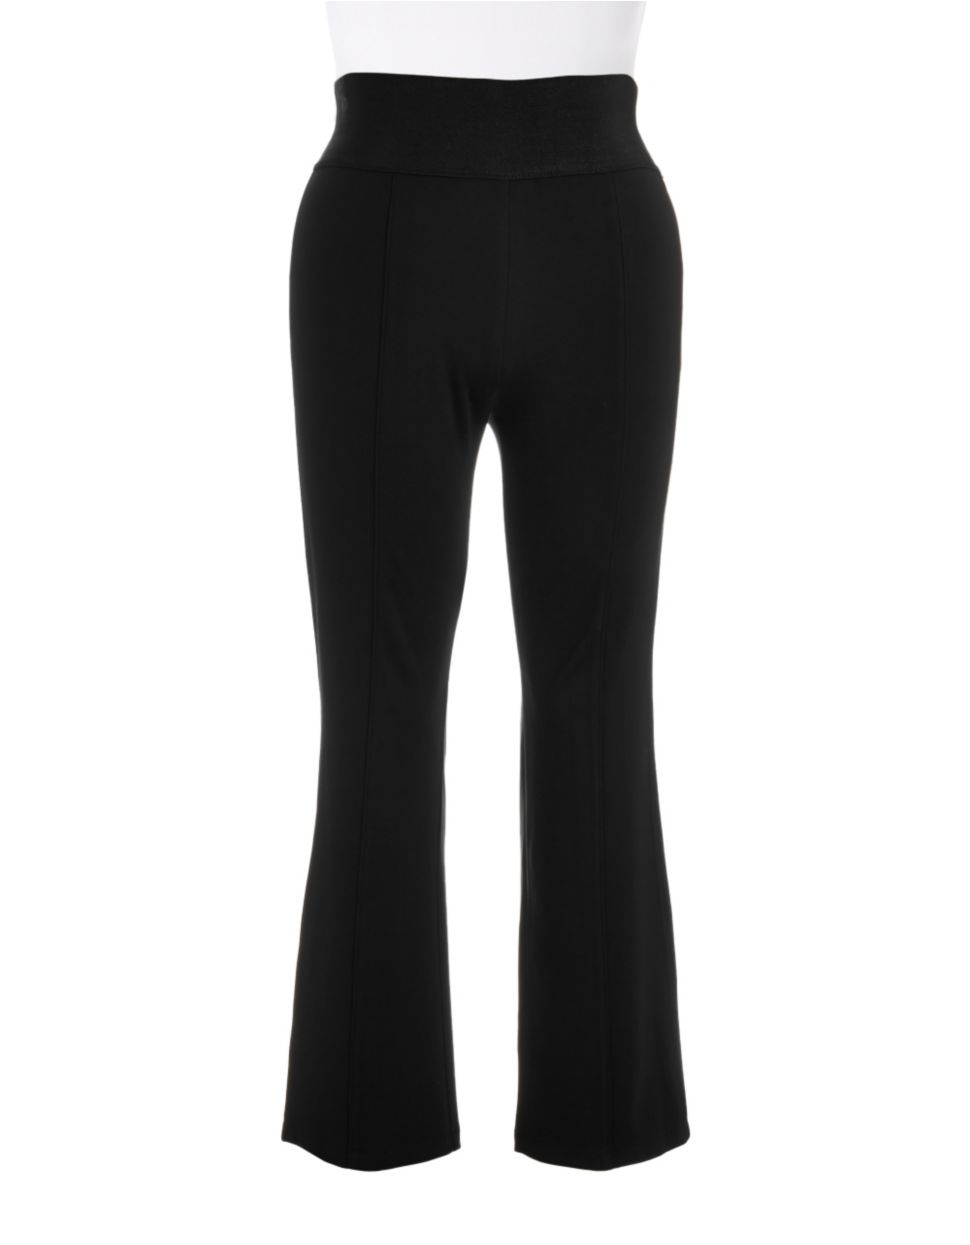 Lyst - Calvin Klein Plus Wide Waist Power Stretch Pants in Black